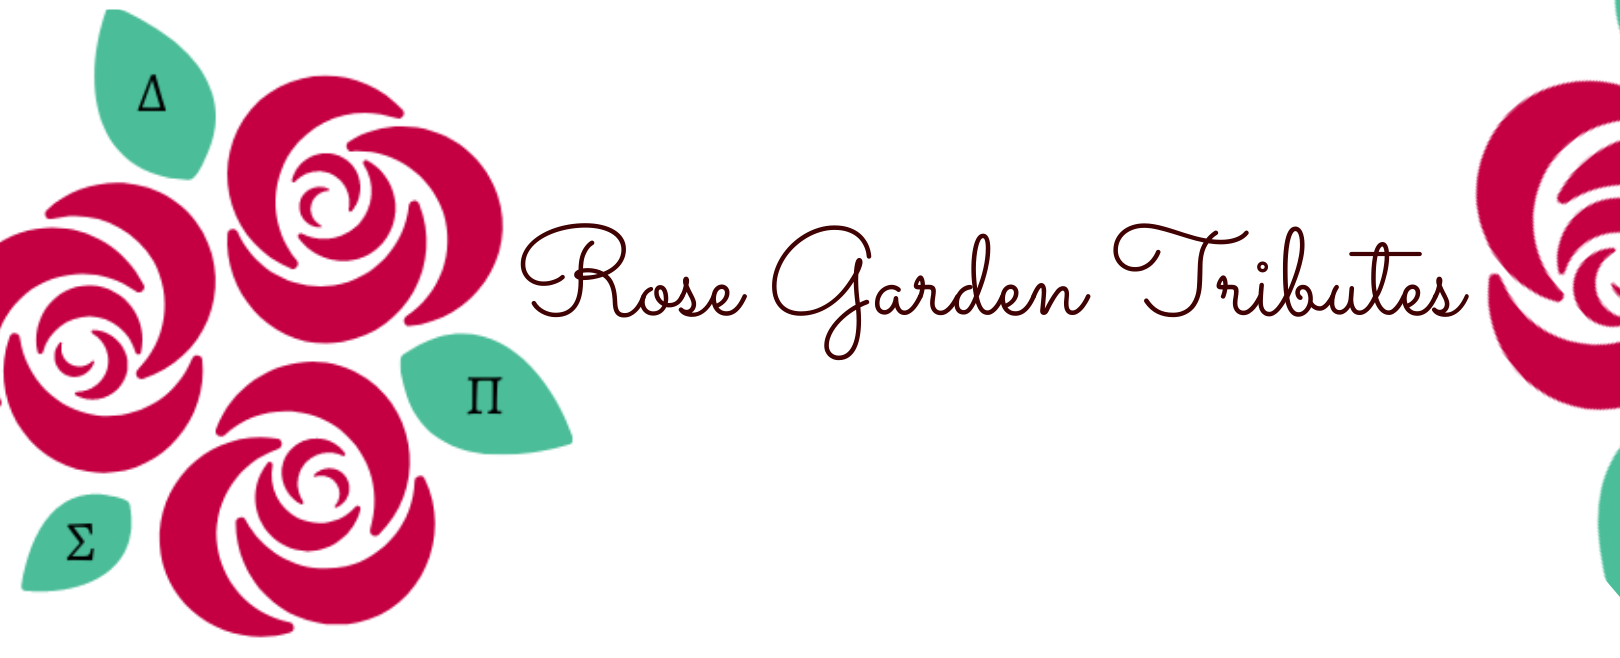 Rose Garden Tributes